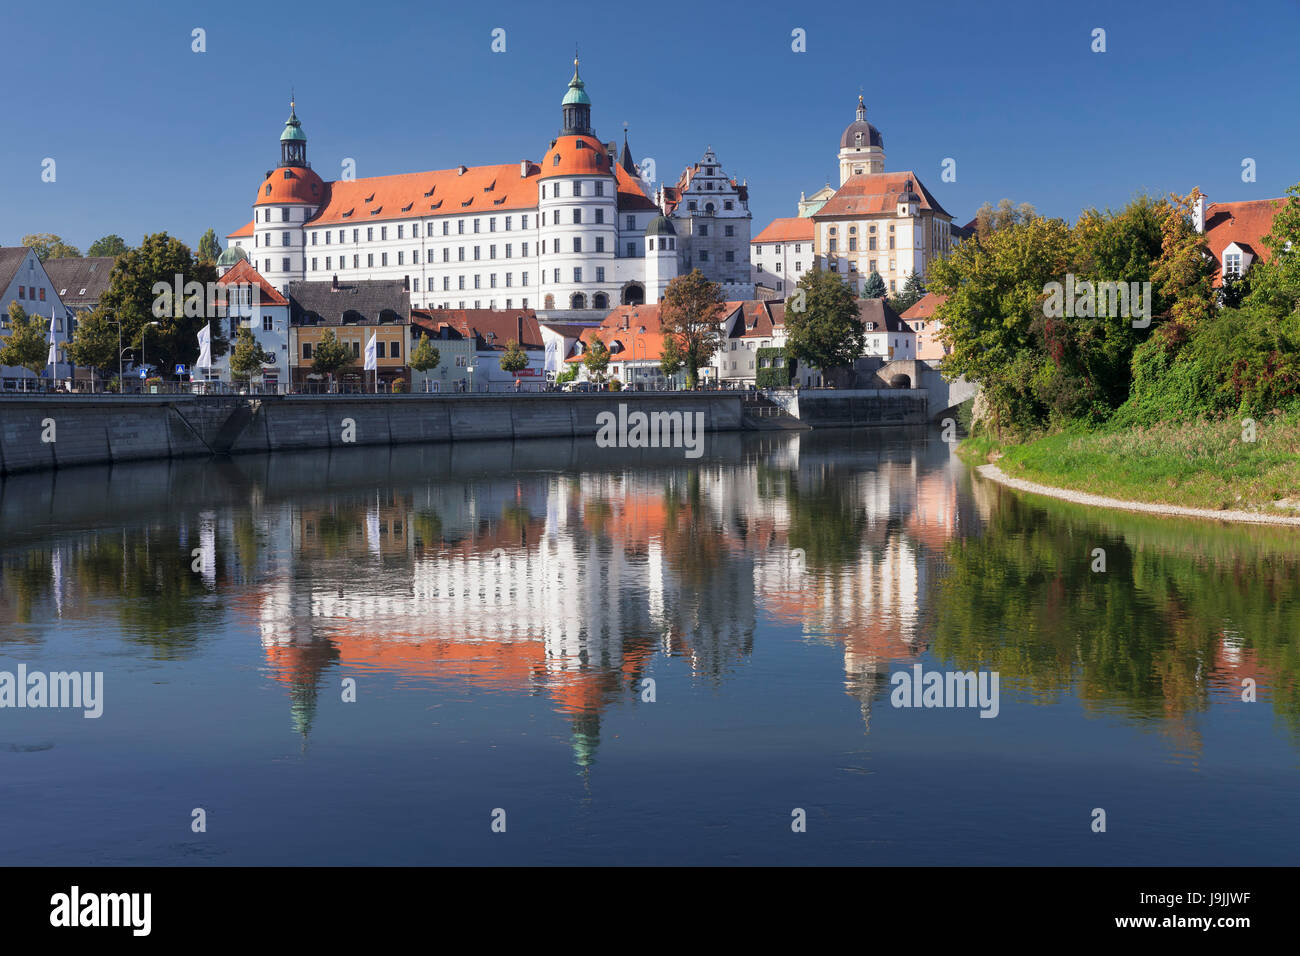 Danube quay with Neuburger residence castle, Neuburg at the Danube, Upper Bavaria, Germany Stock Photo